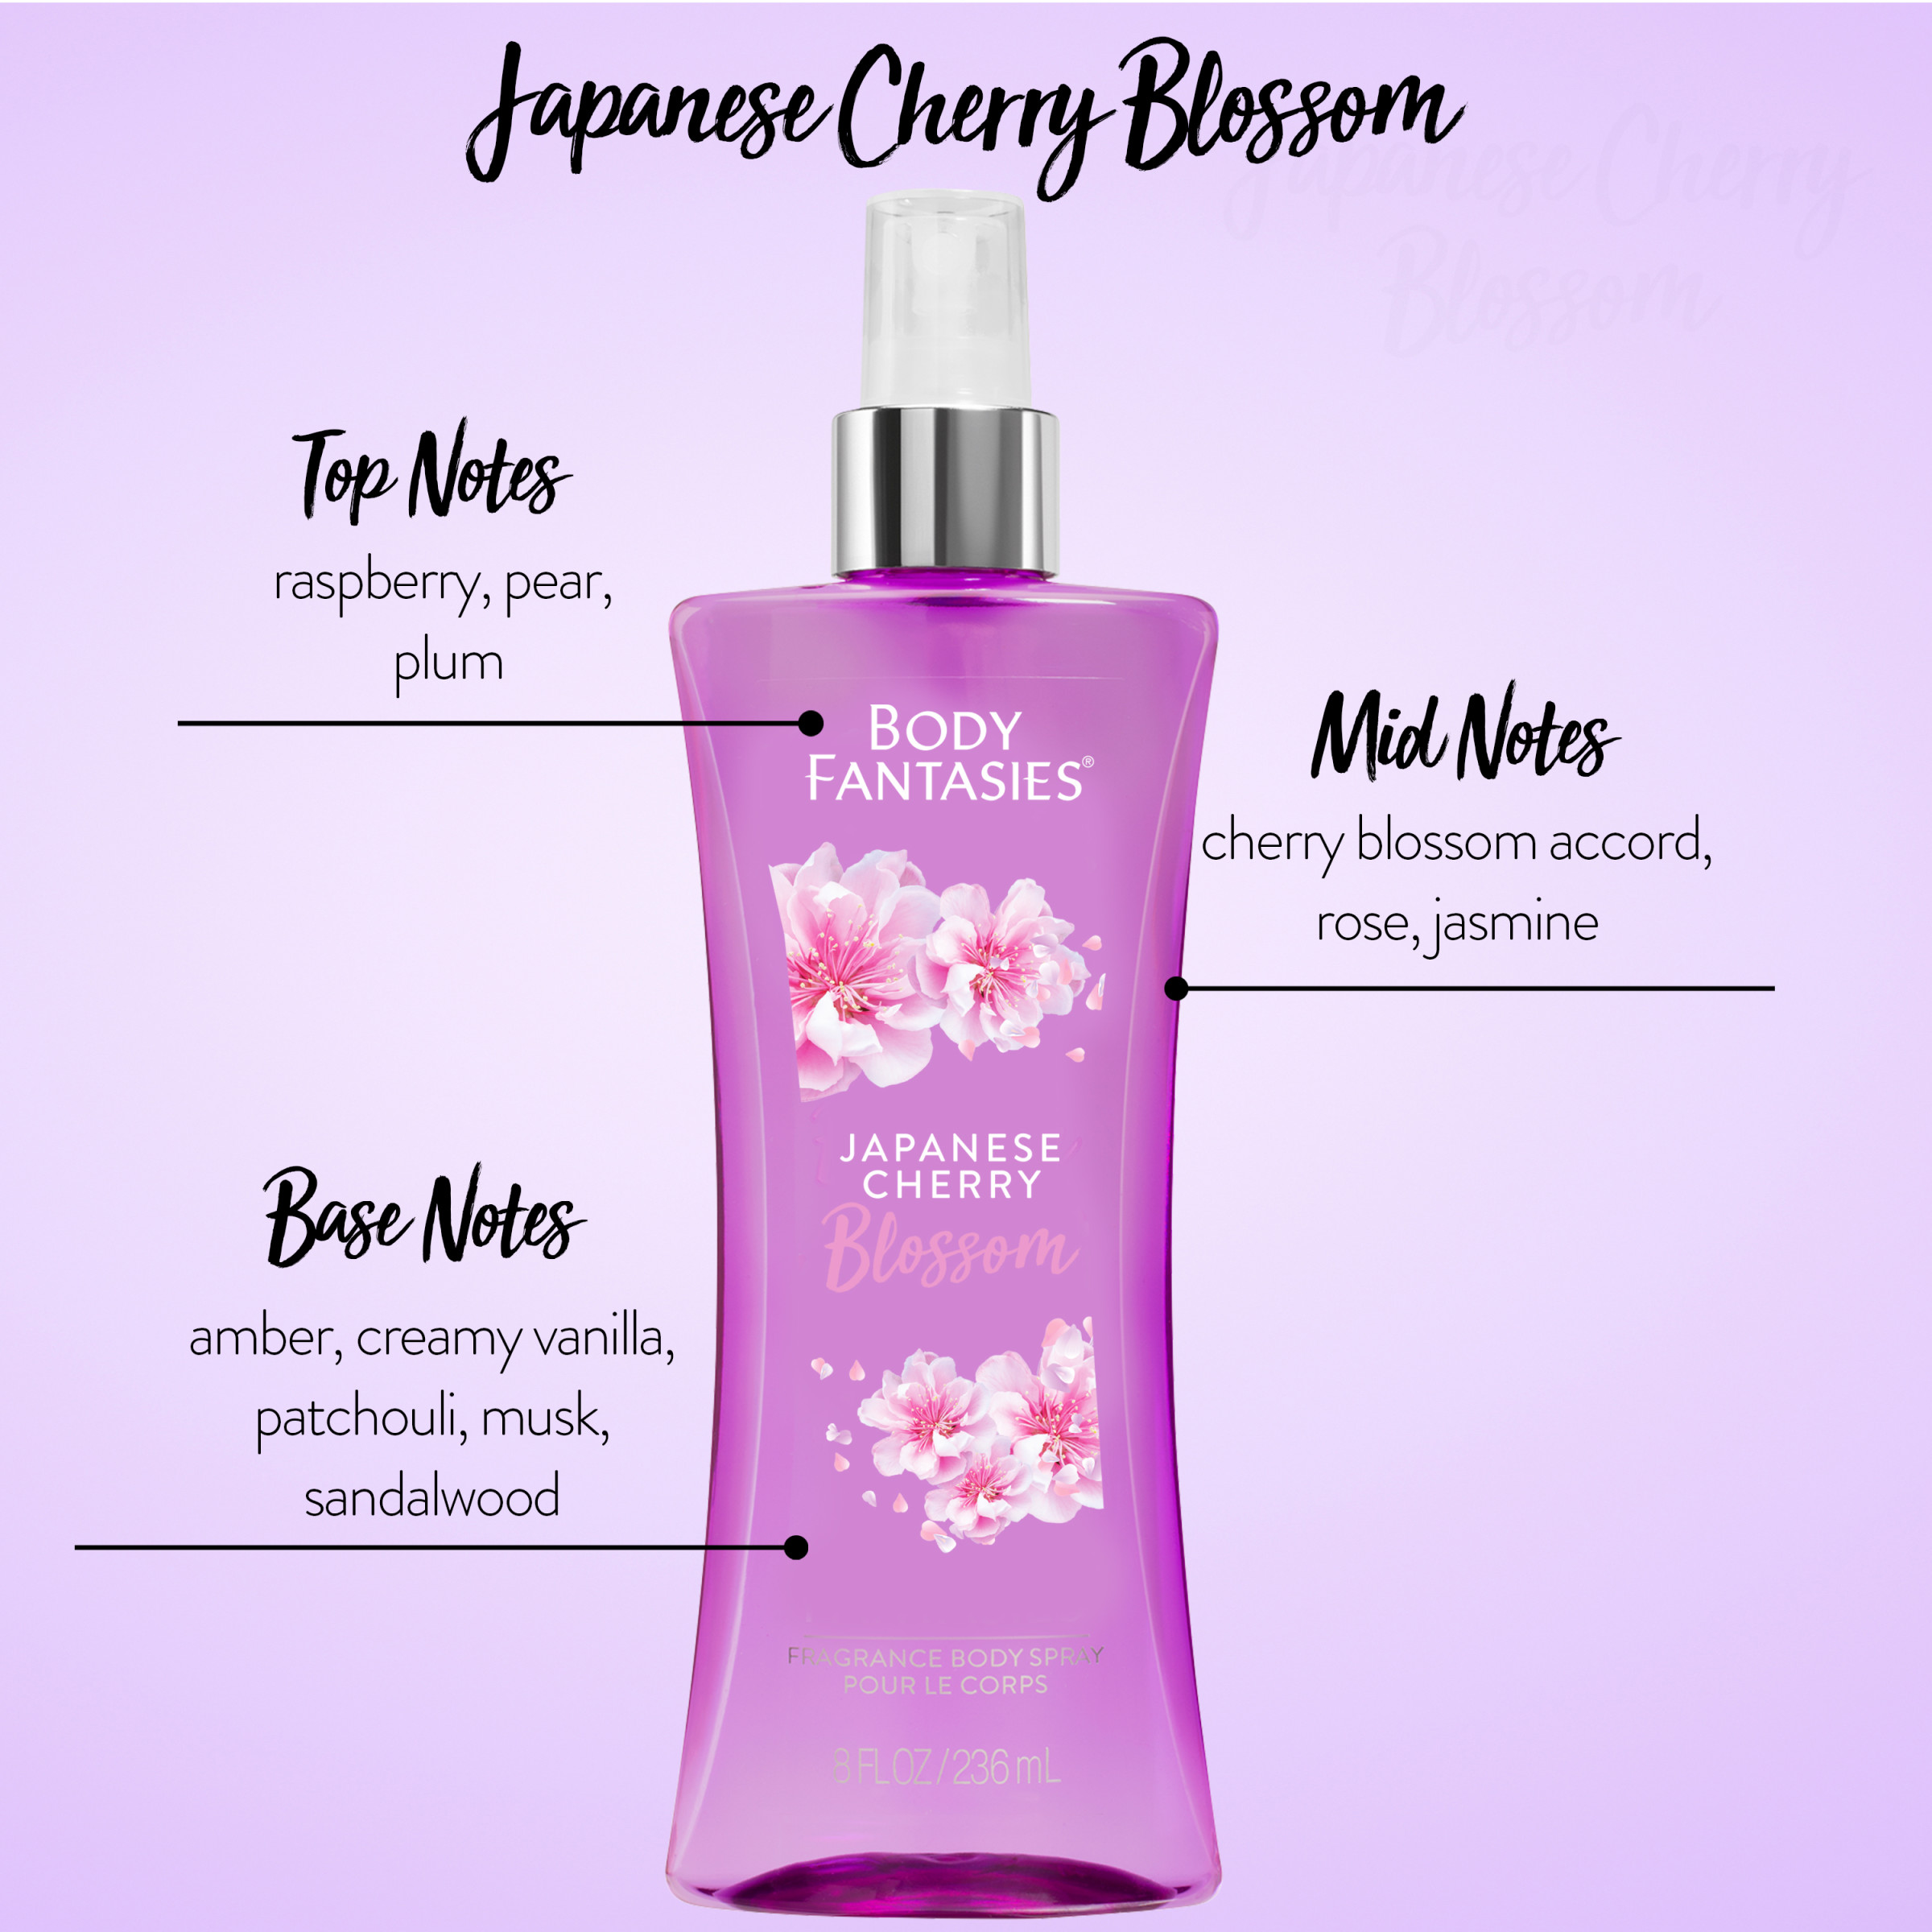 Body Fantasies Signature Japanese Cherry Blossom Fragrance Body Spray for Women, 8 fl.oz. - image 4 of 8